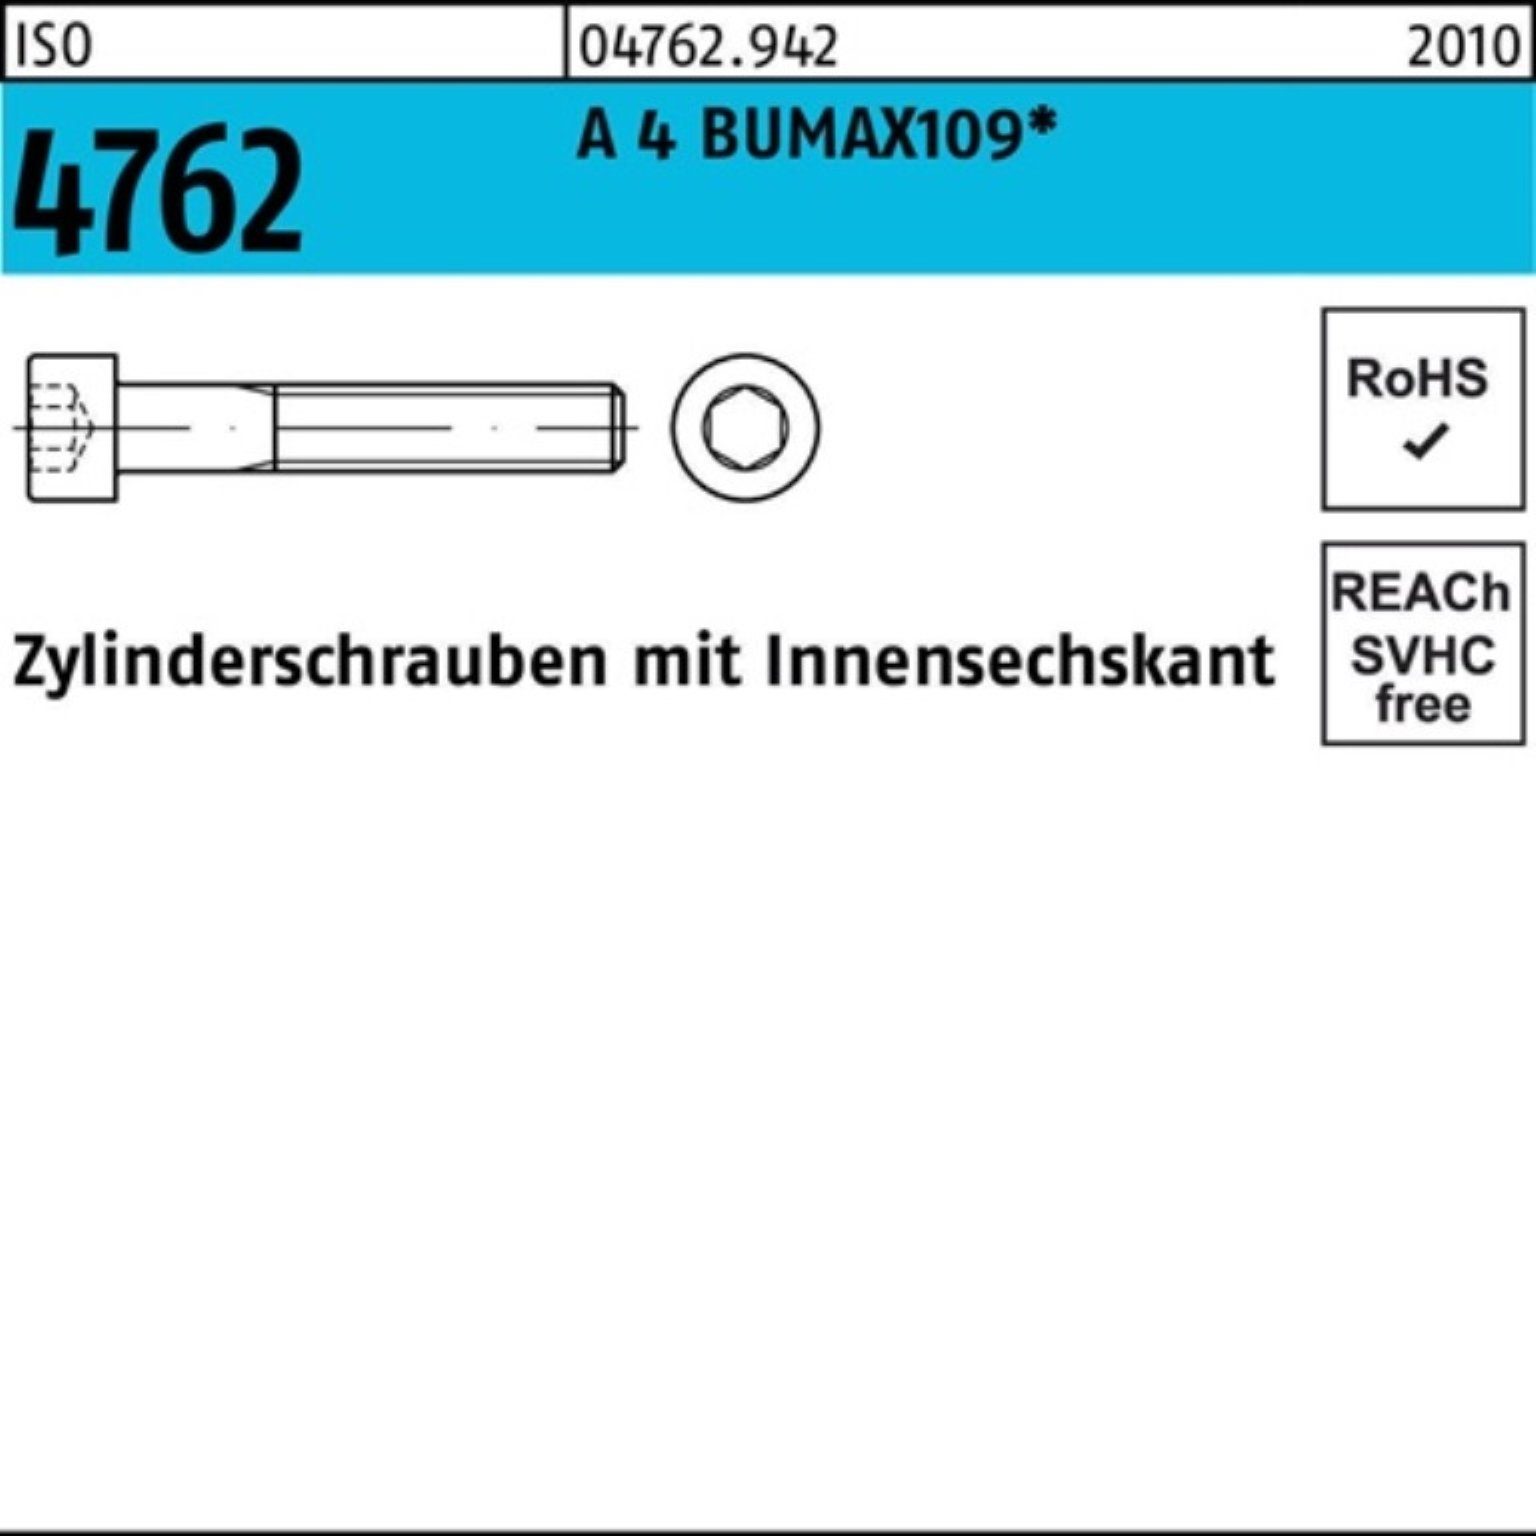 Bufab Zylinderschraube 100er Pack Zylinderschraube ISO 4762 Innen-6kt M12x 80 A 4 BUMAX109 25